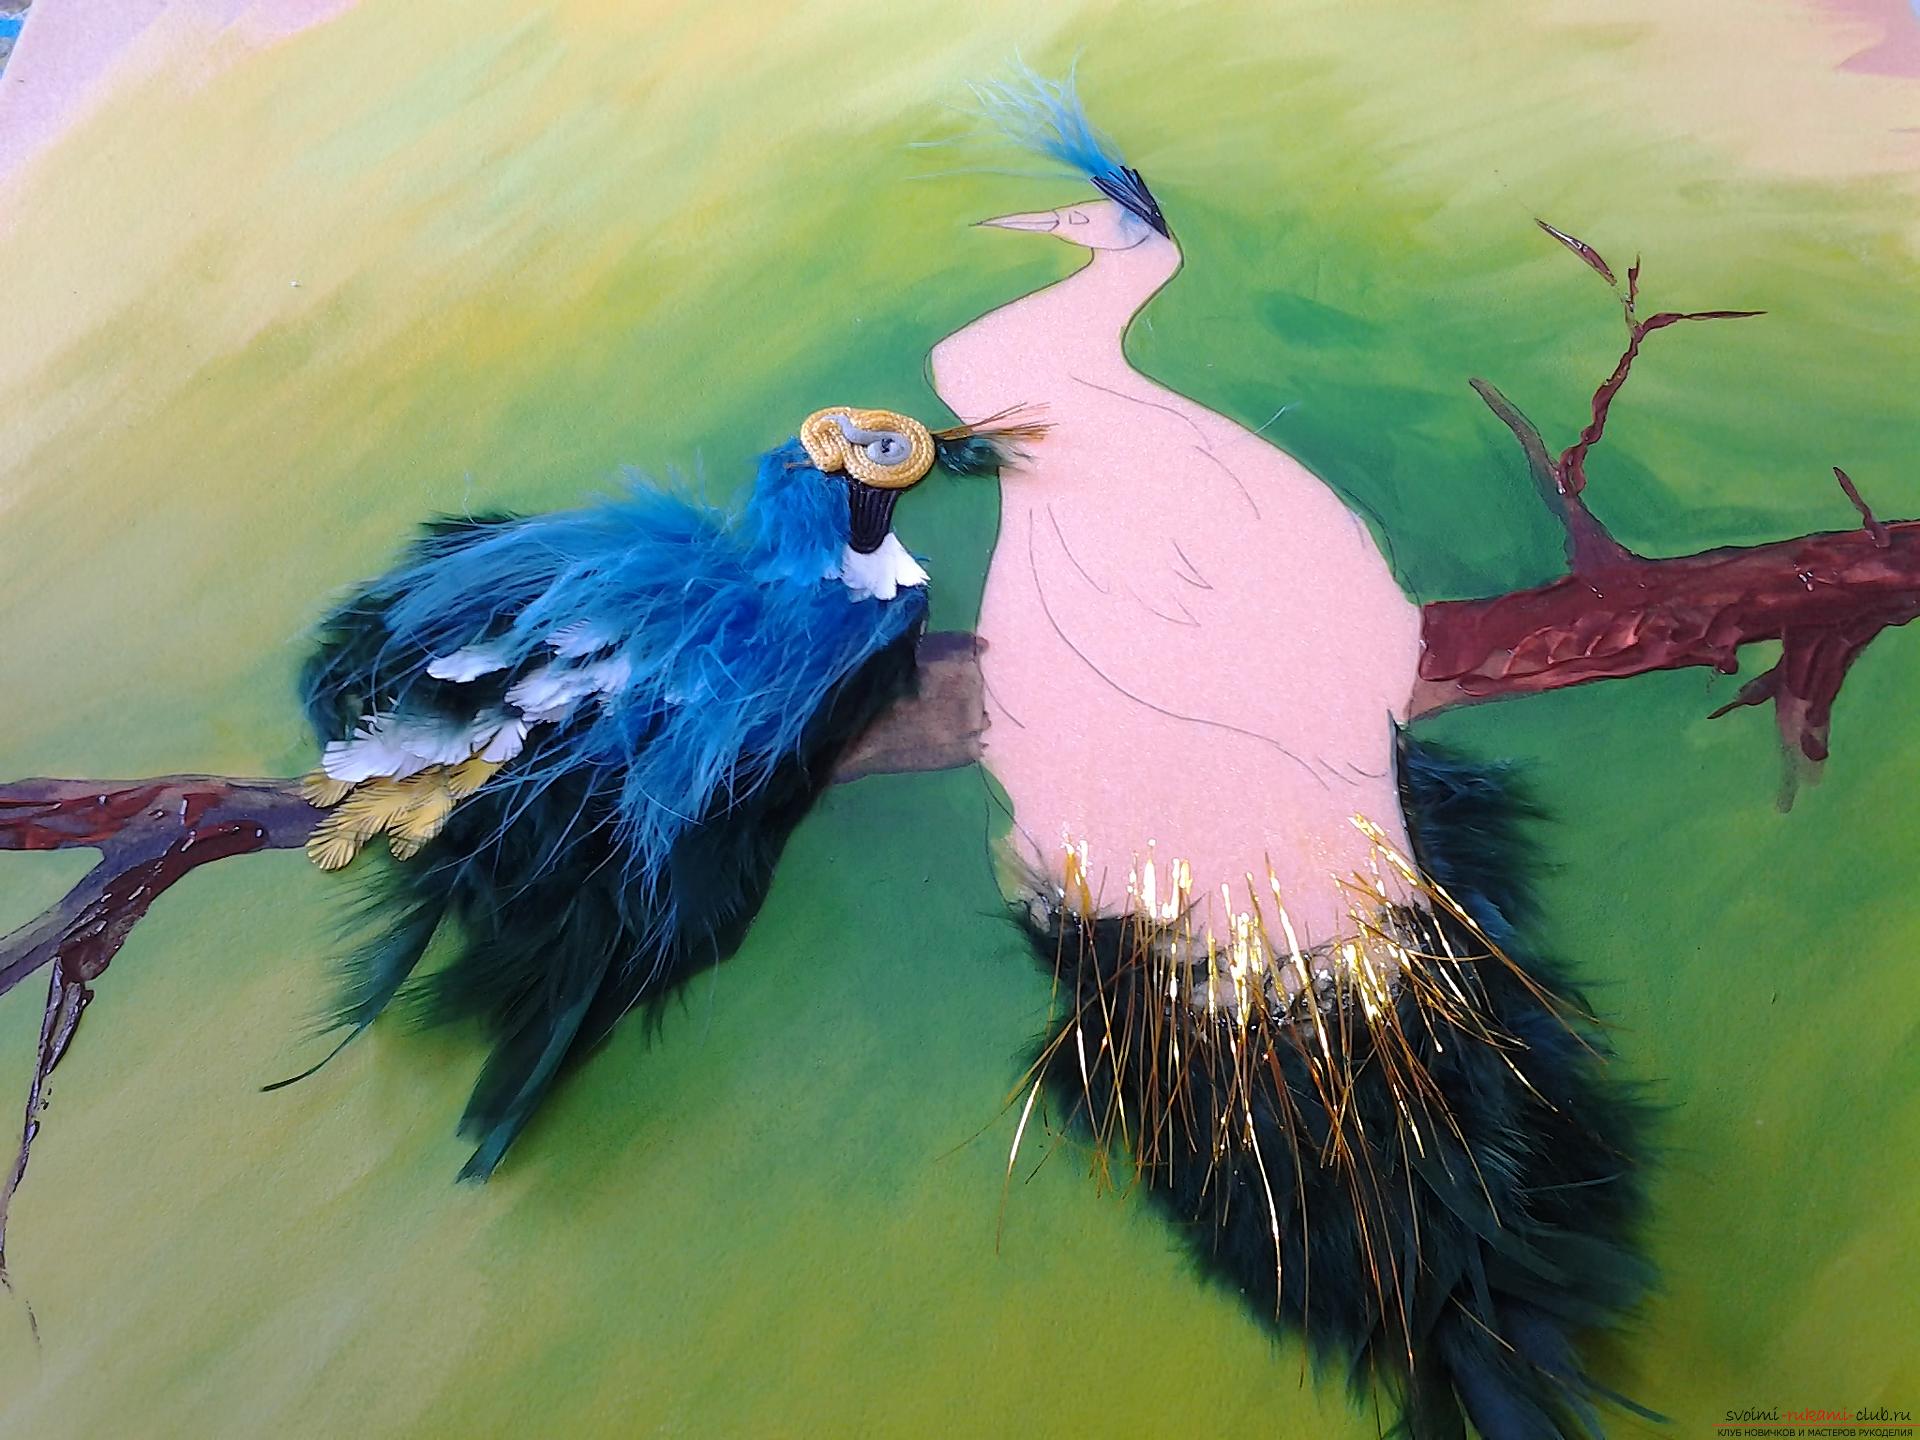 Original painting: birds on a branch. Photo # 2